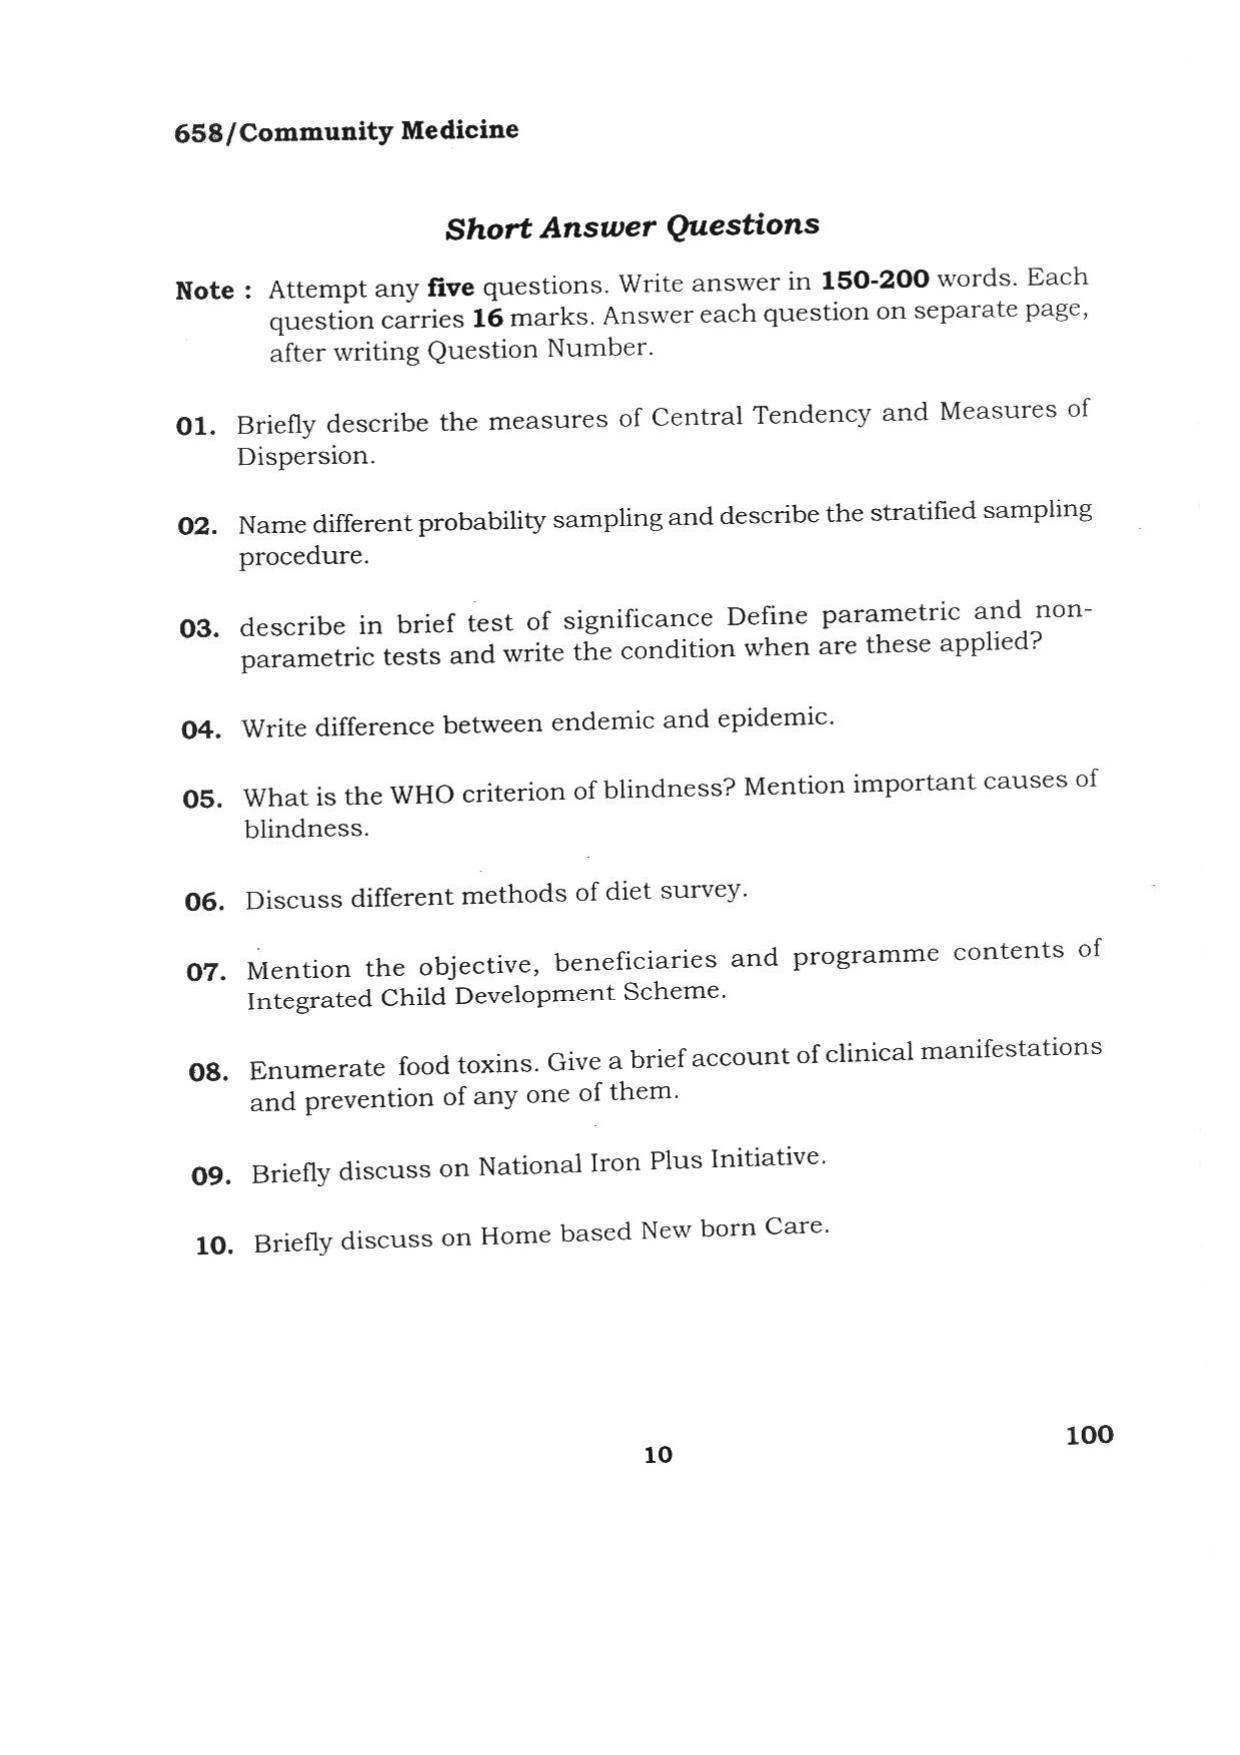 BHU RET COMMUNITY MEDICINE 2015 Question Paper - Page 10